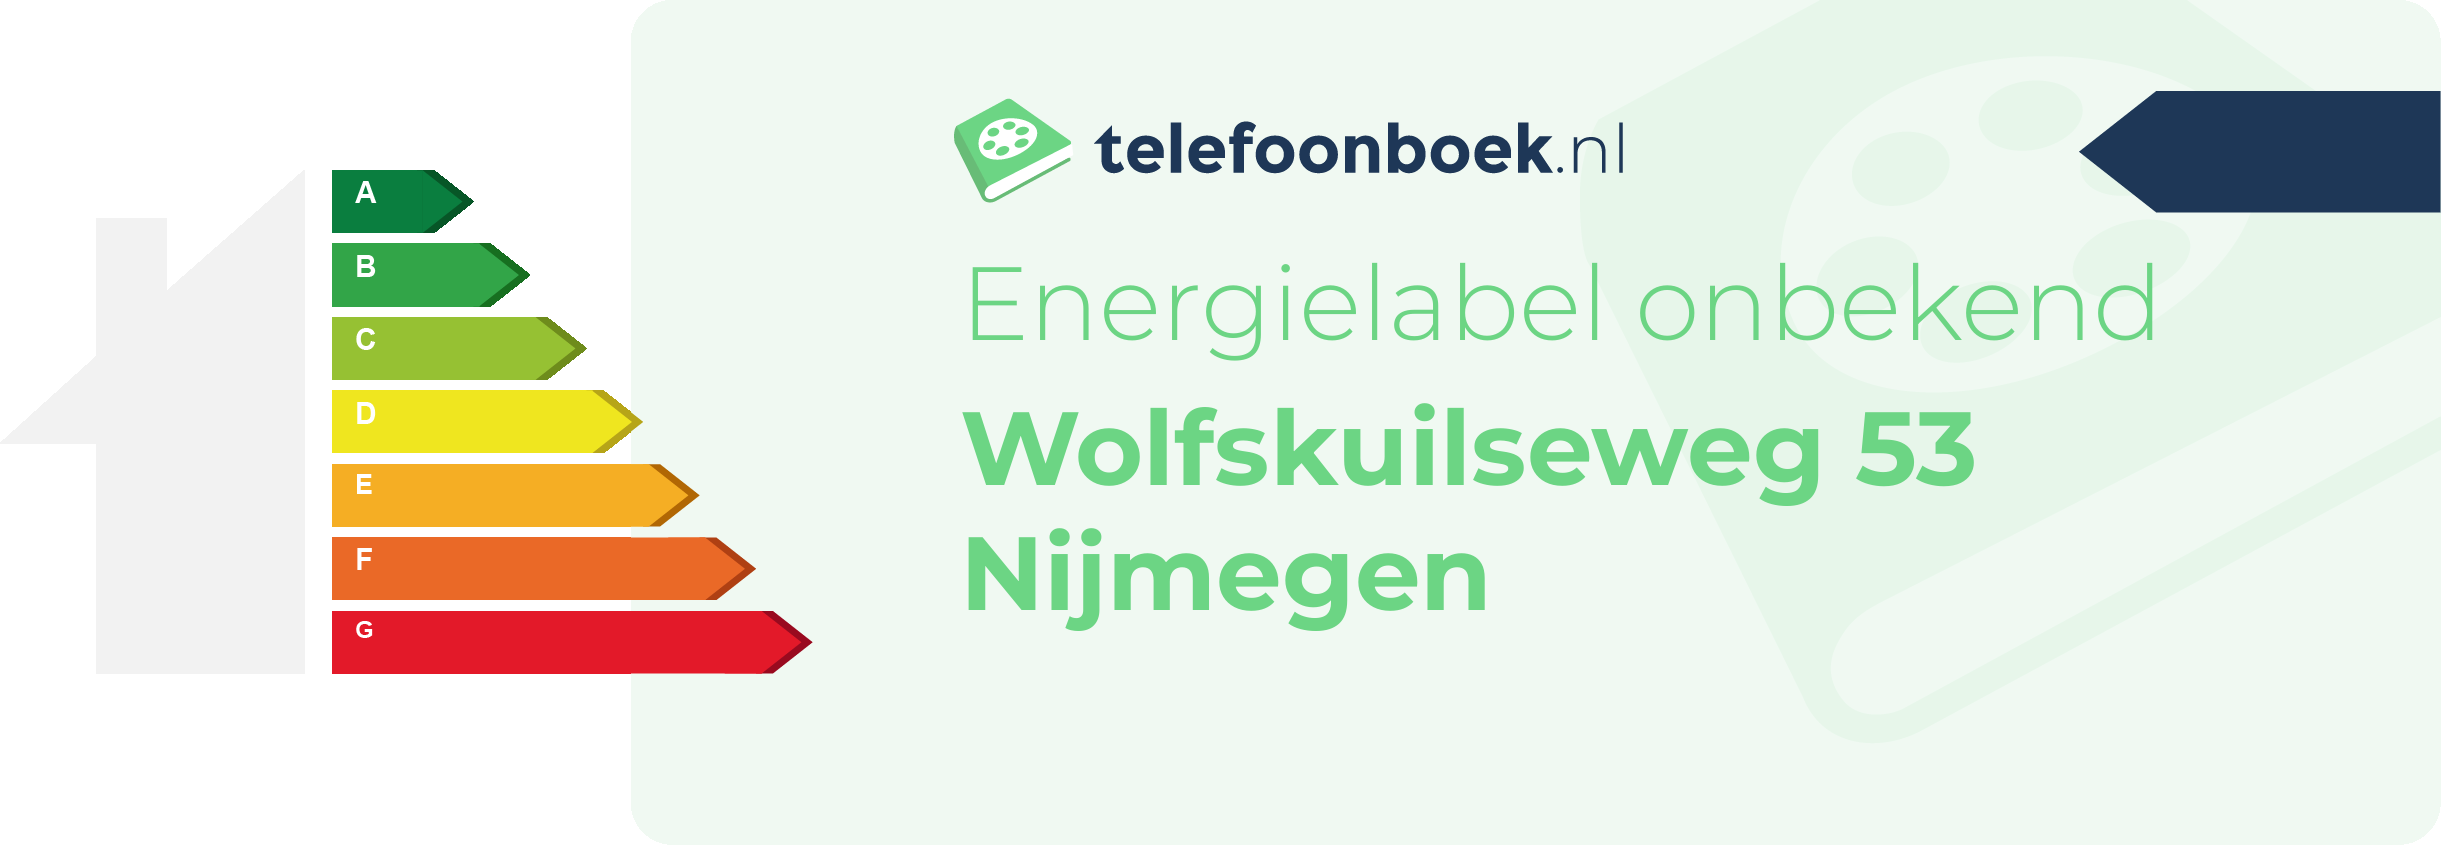 Energielabel Wolfskuilseweg 53 Nijmegen